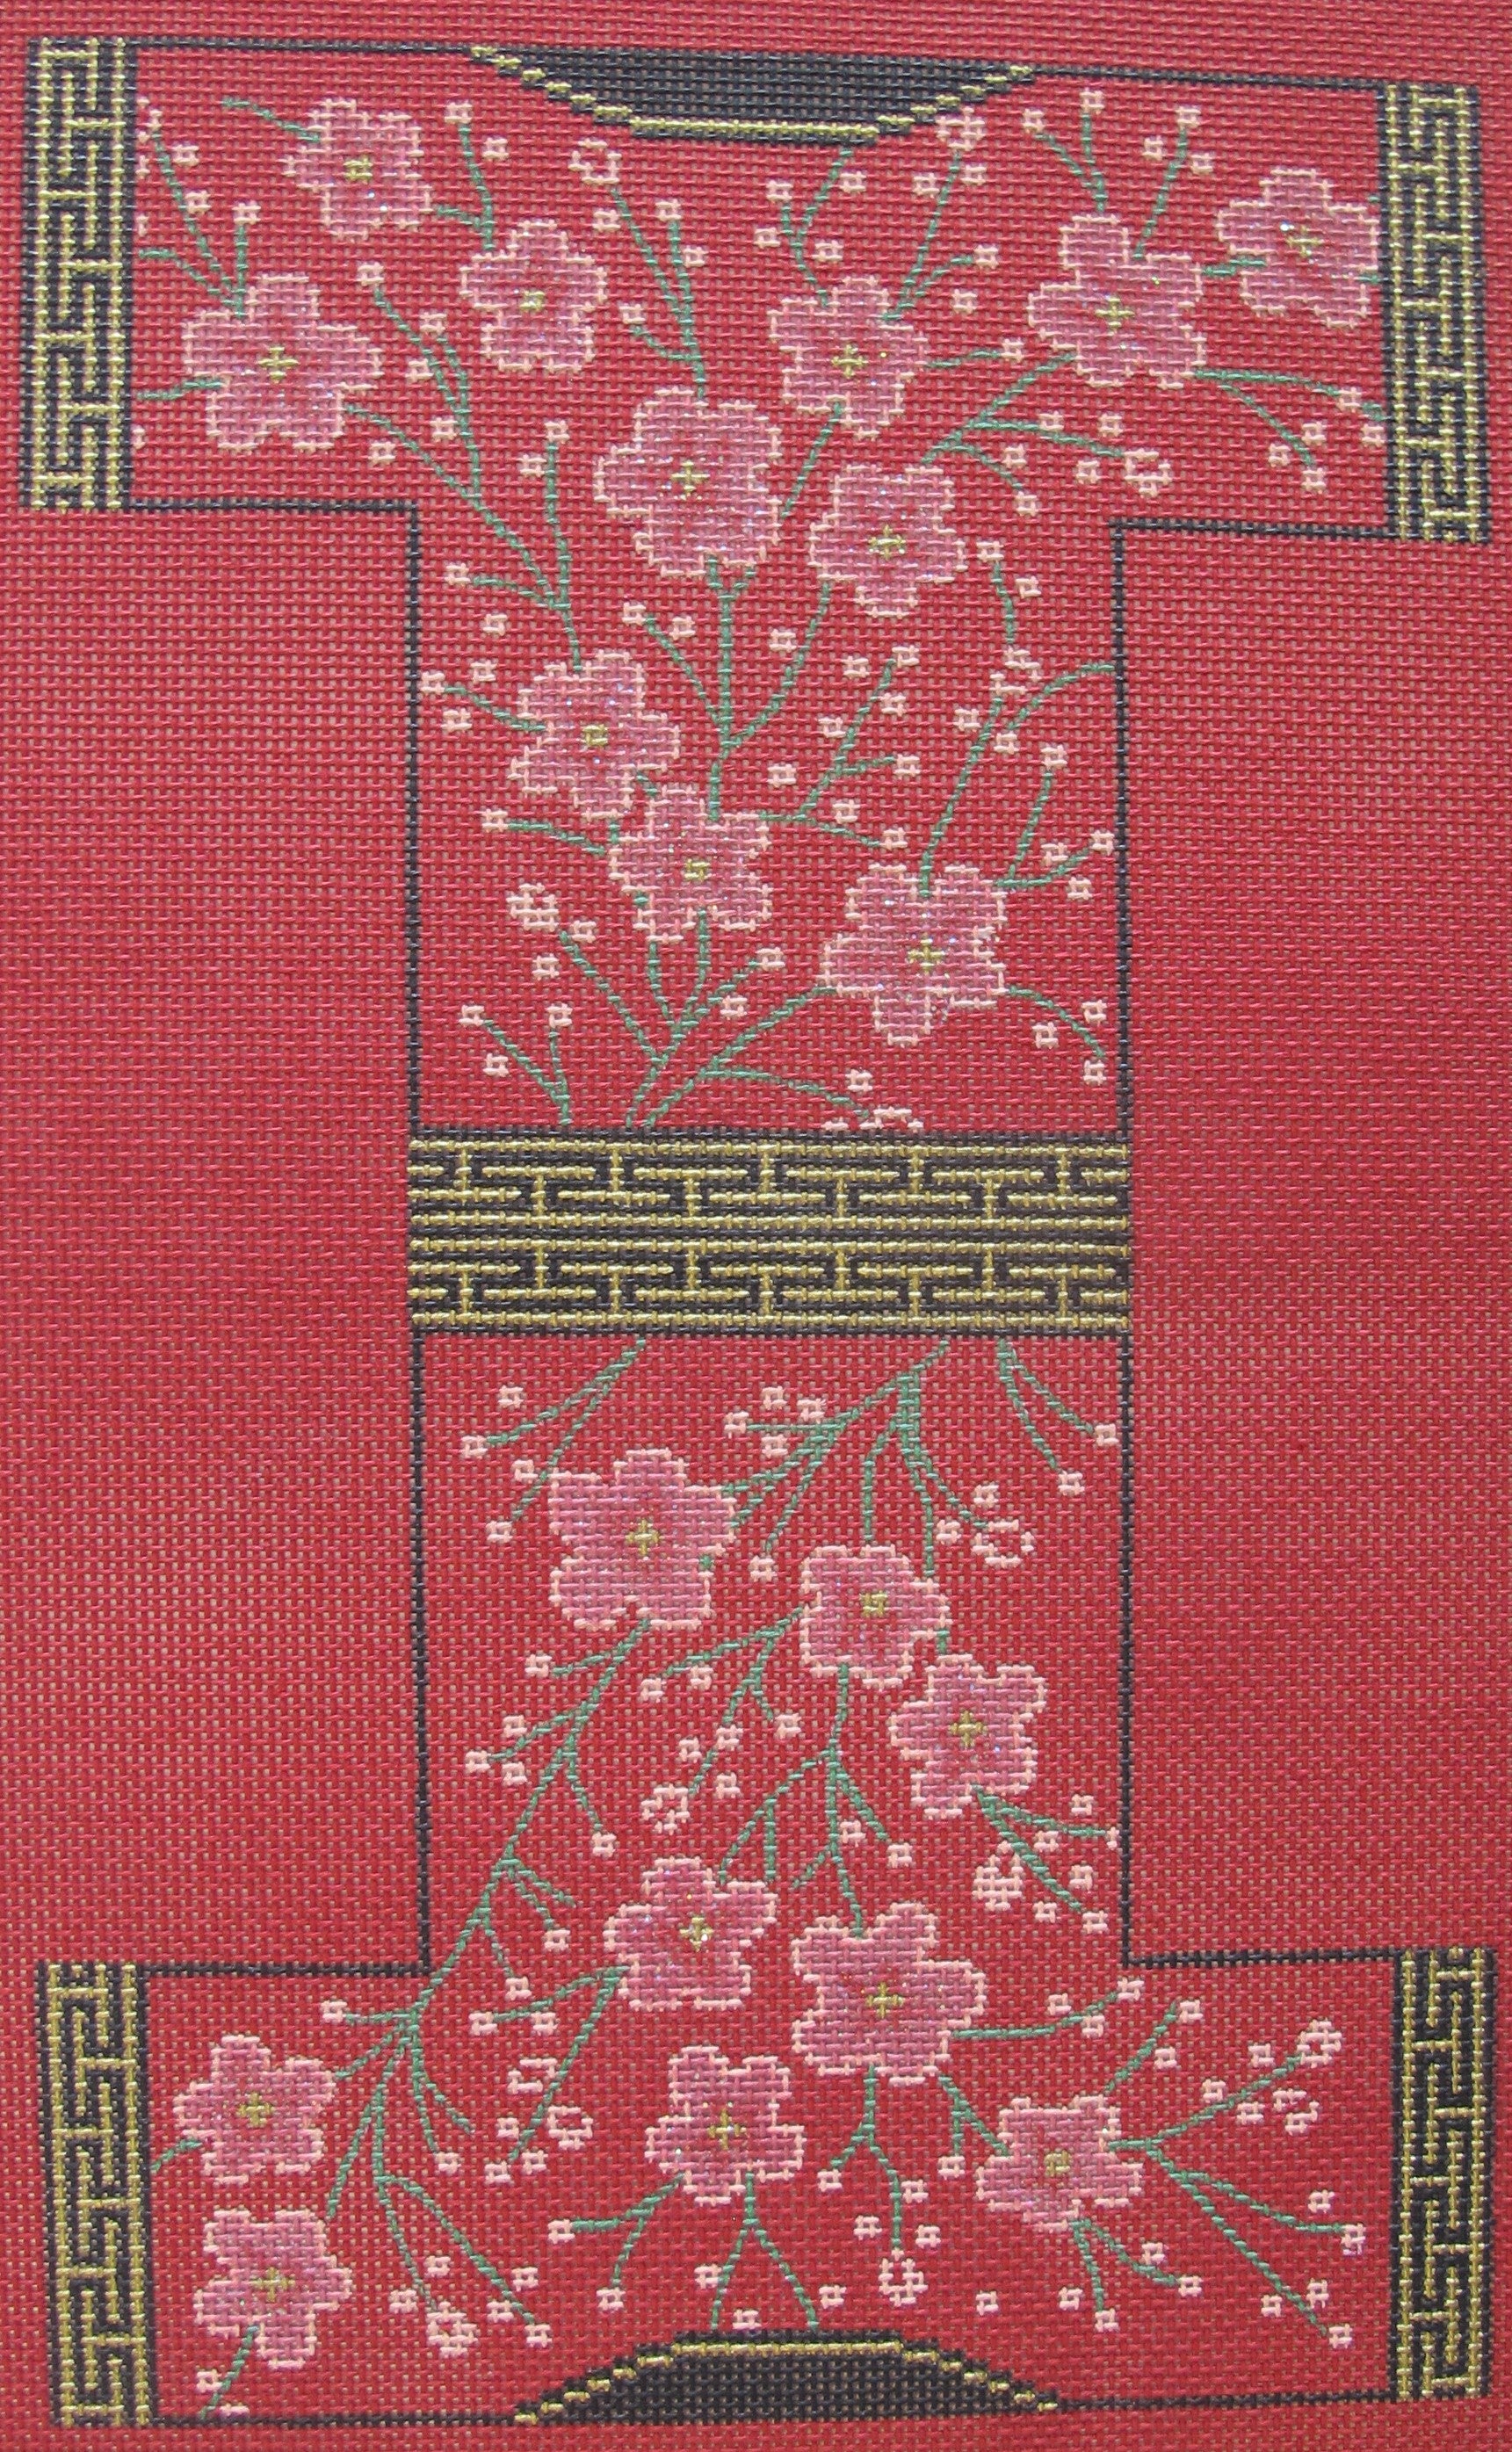 Cherry Blossom Kimono on Red